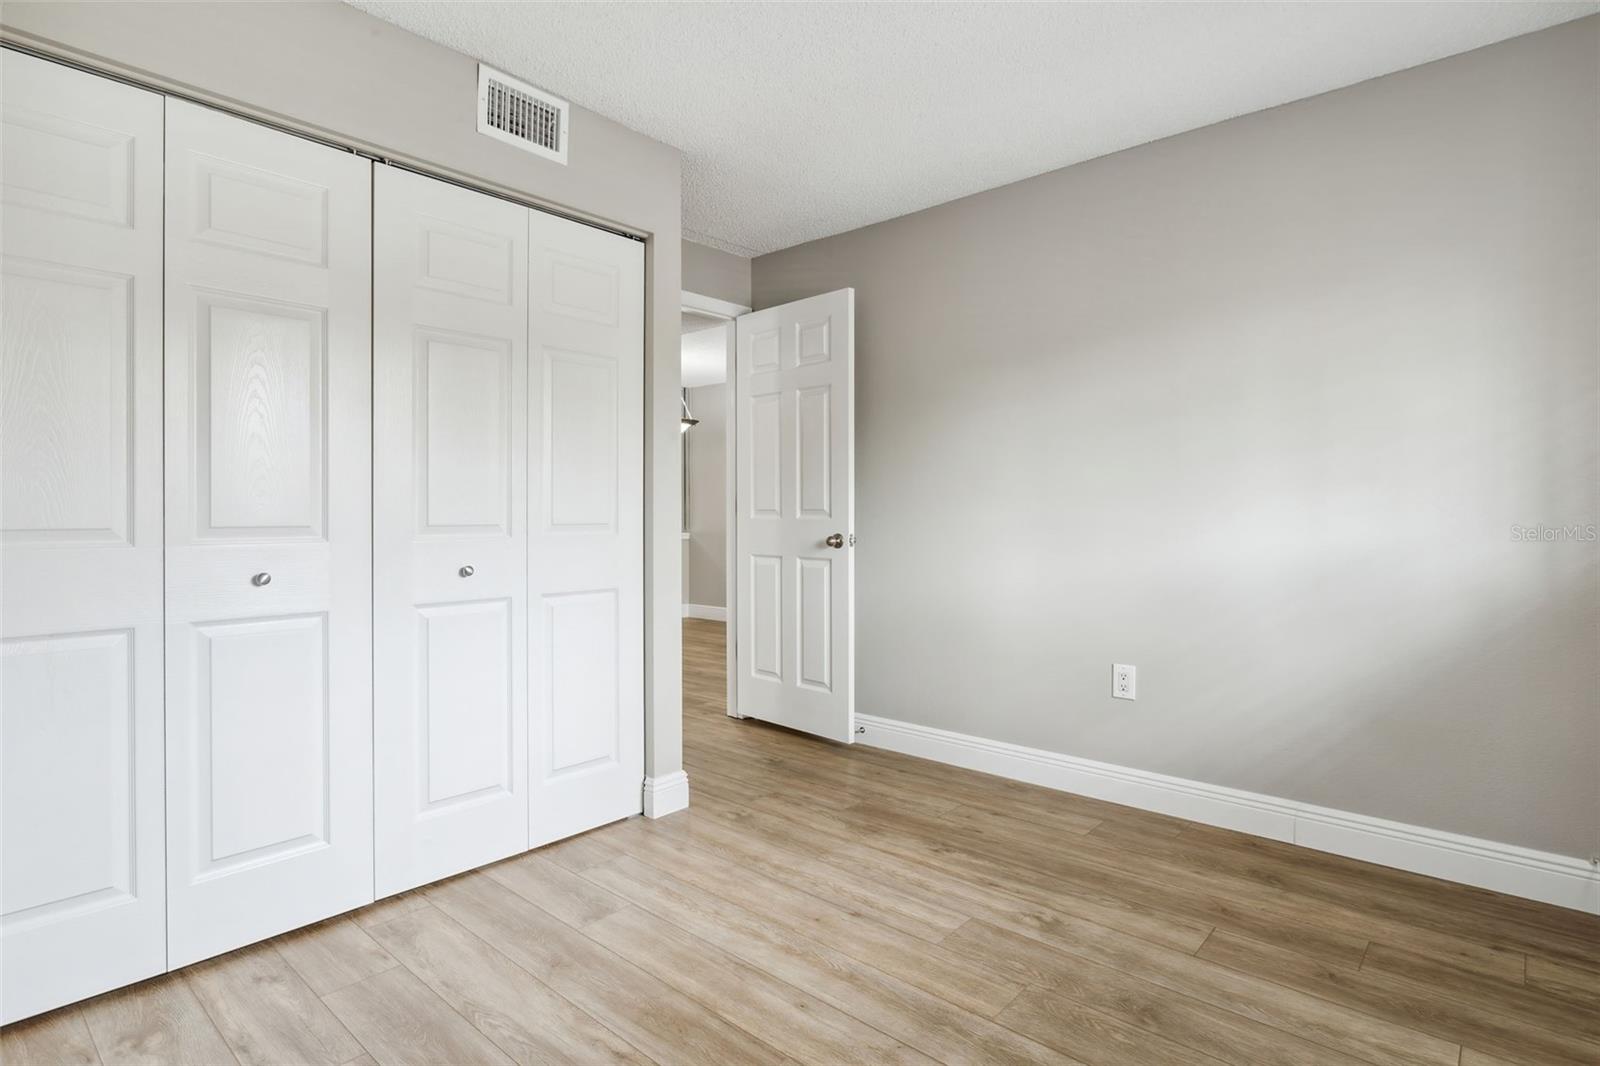 View of the double door closet and door to hallway. Very comfortable, completely painted, and new floor.